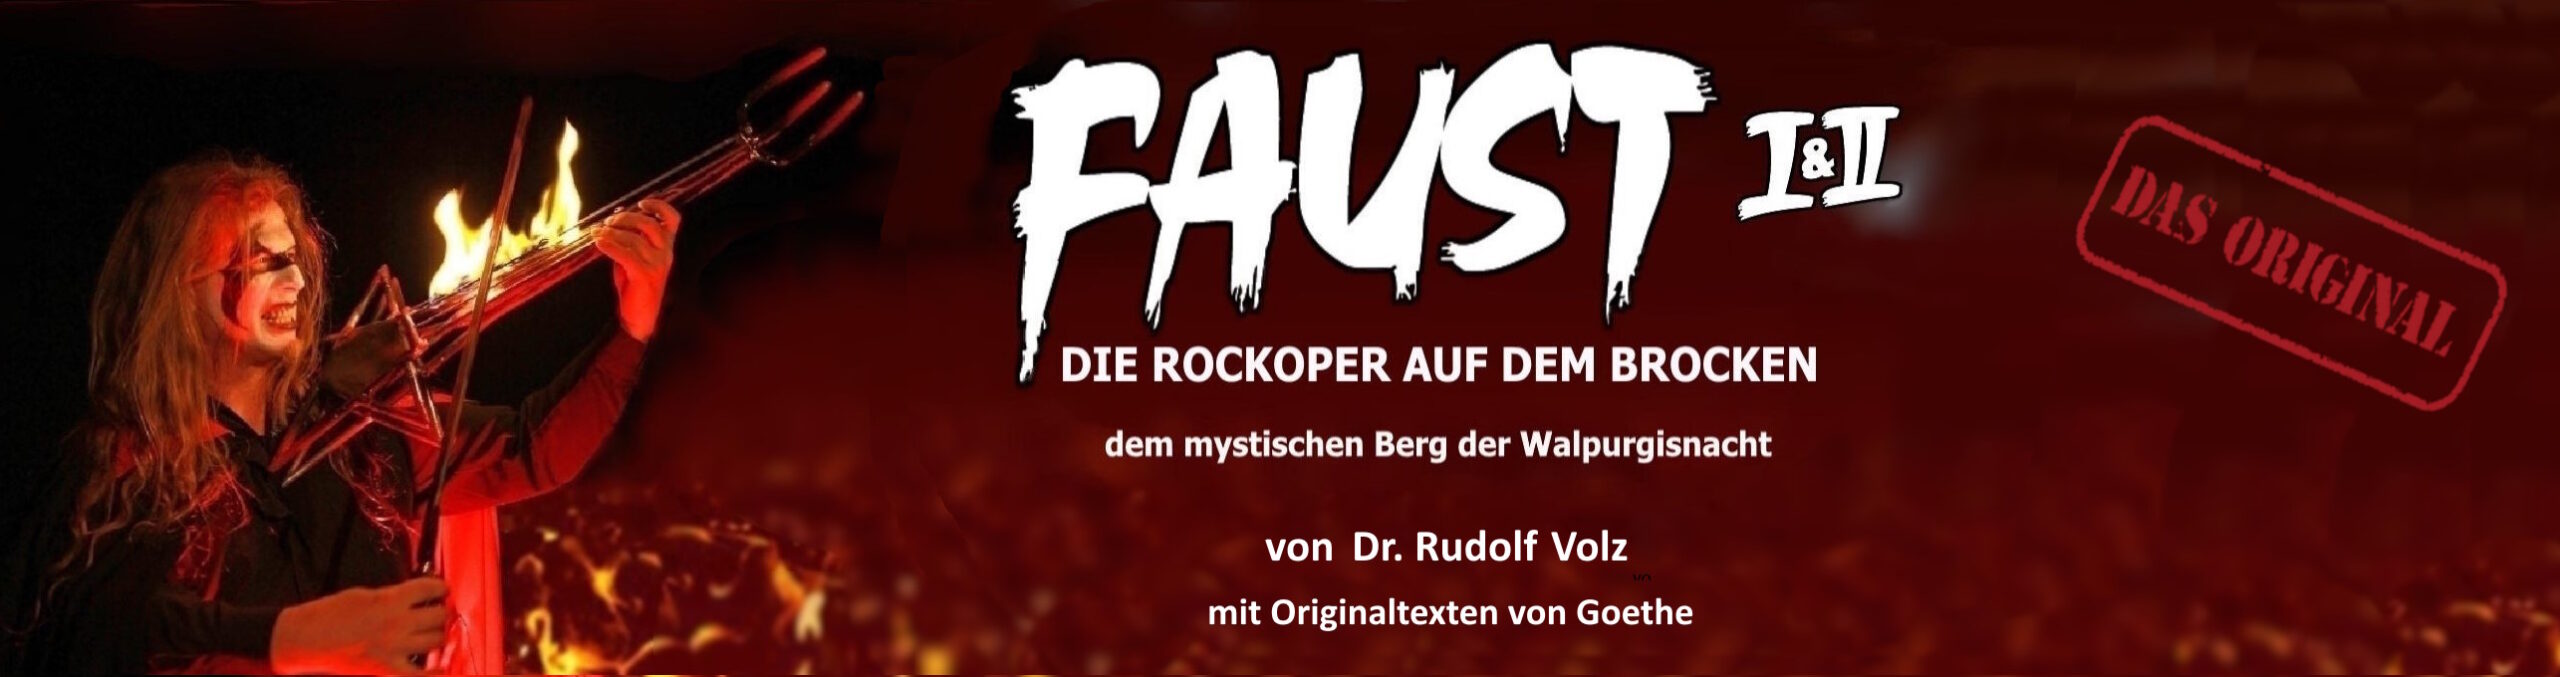 Faust Brocken Rocktheater Manthey Faust 'n' Roll